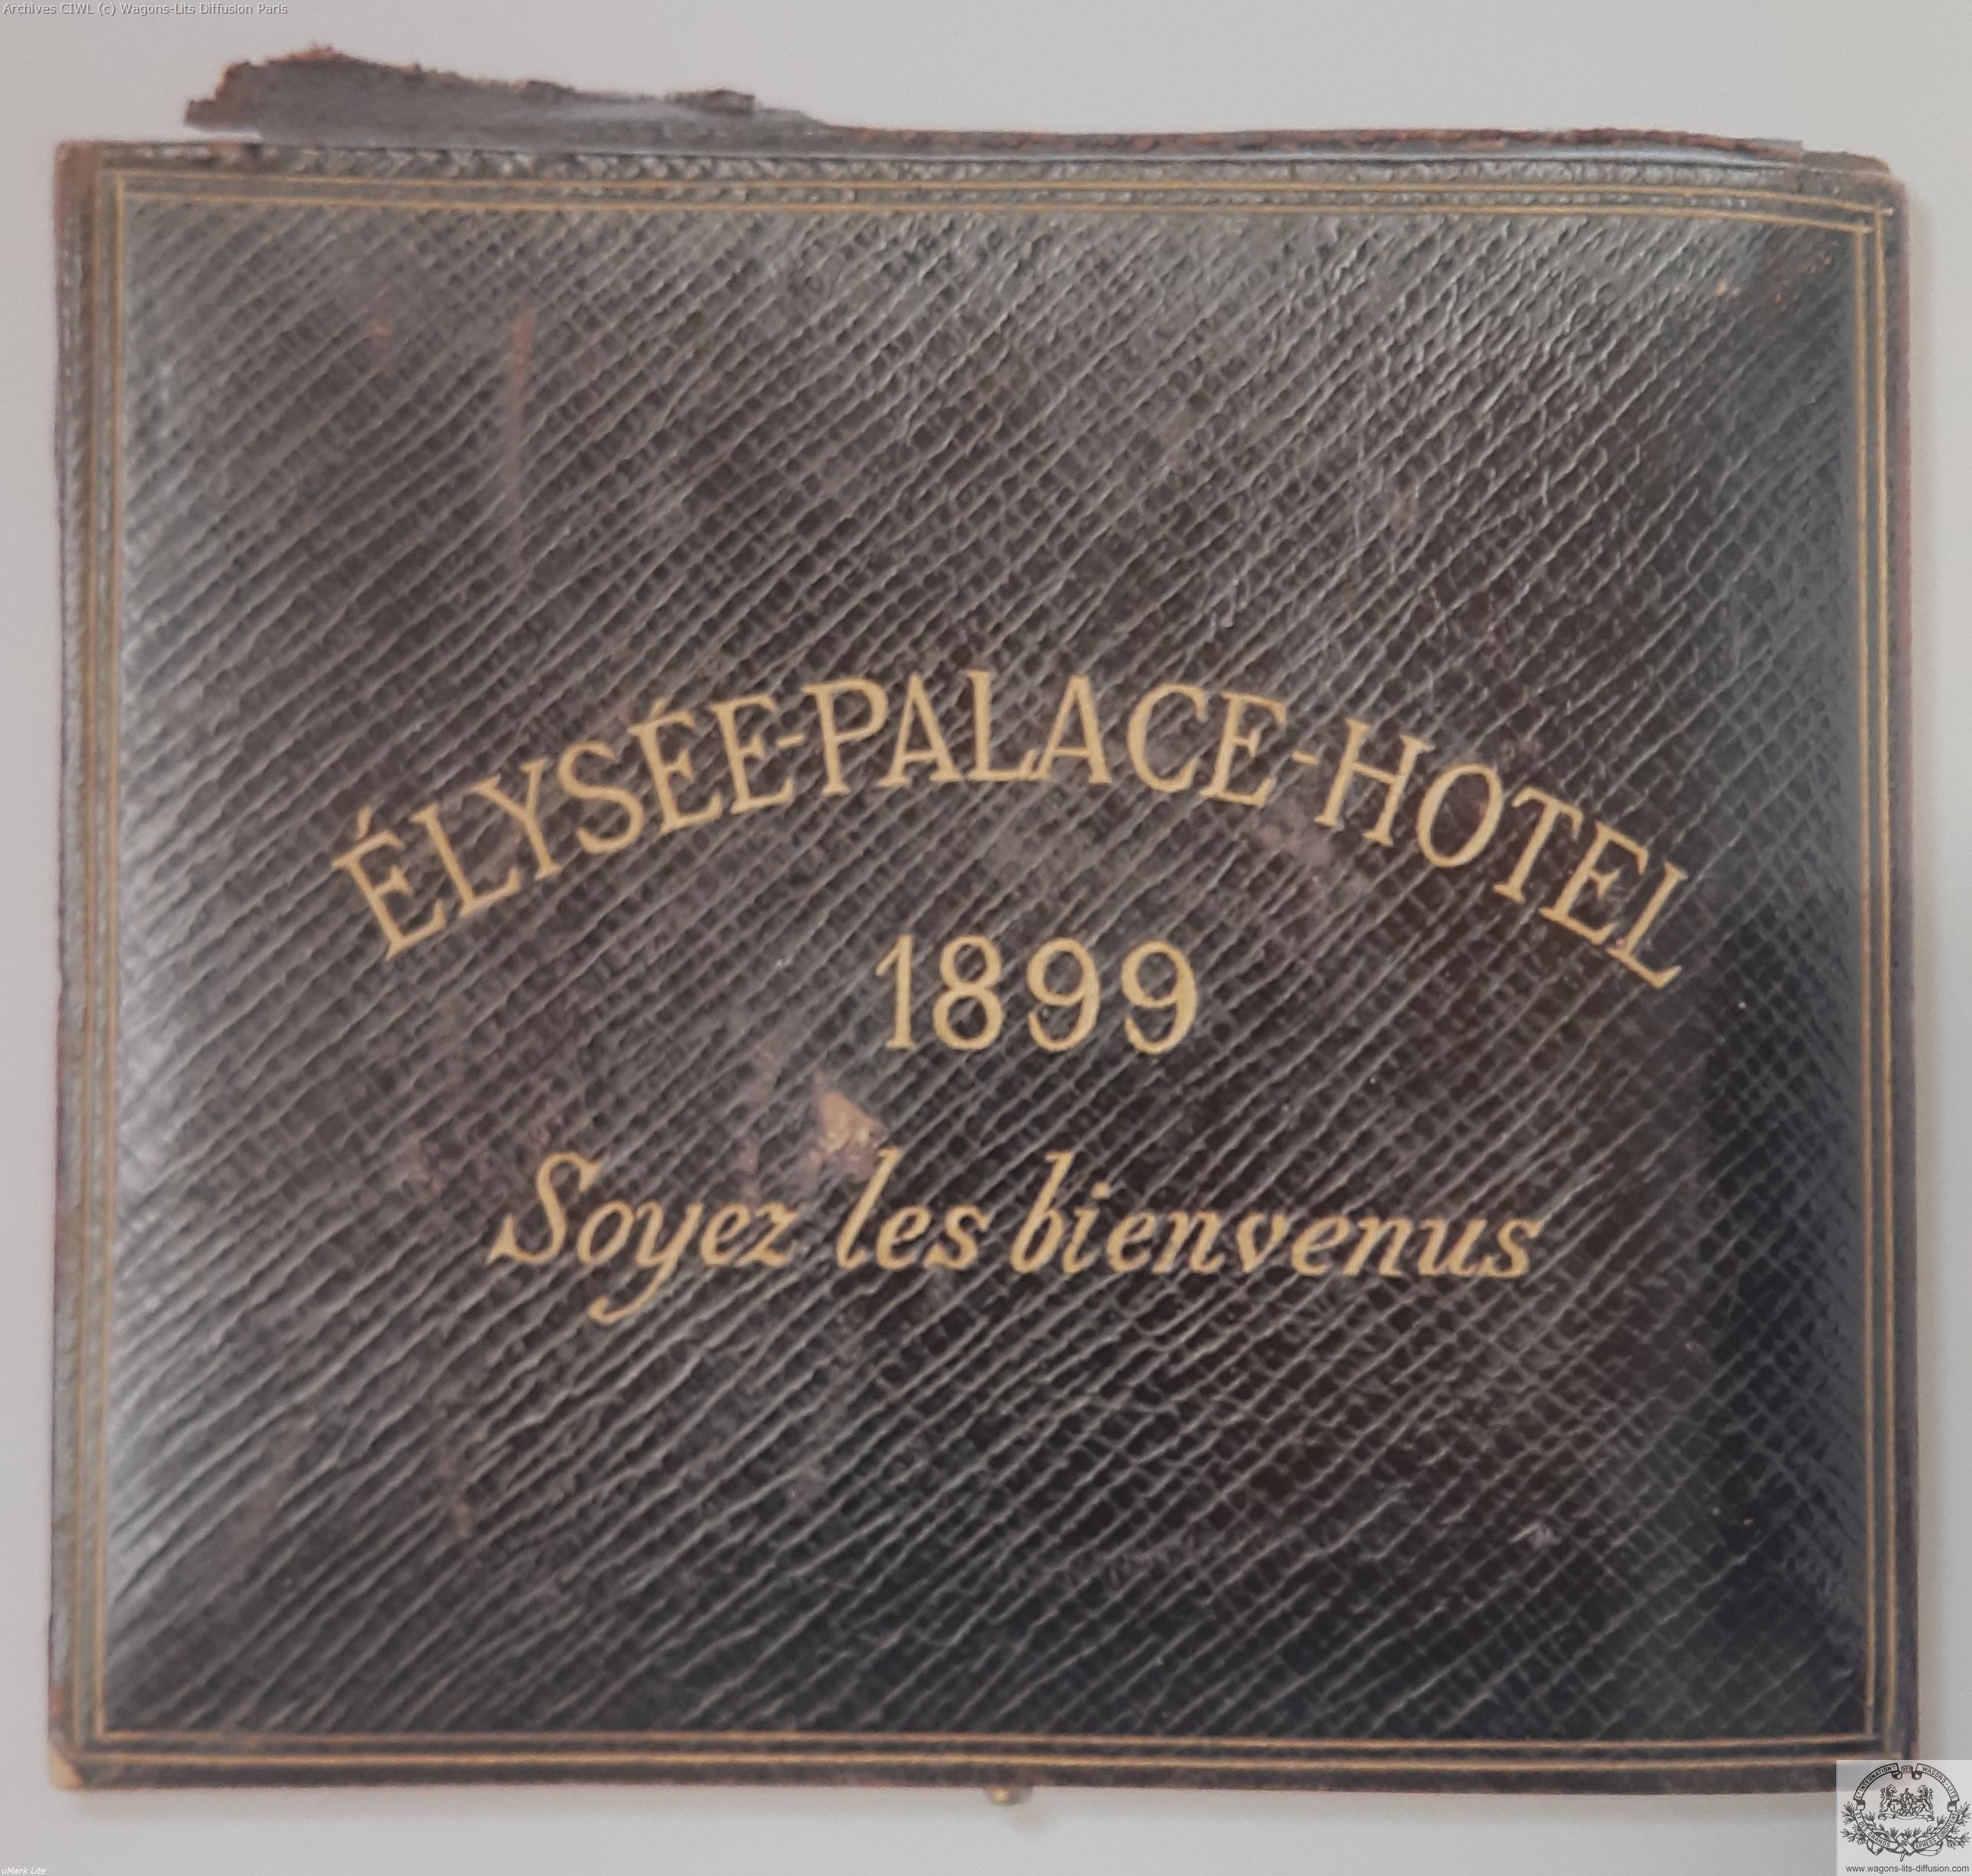 Wl elysees palace hotel paris 1899 gift